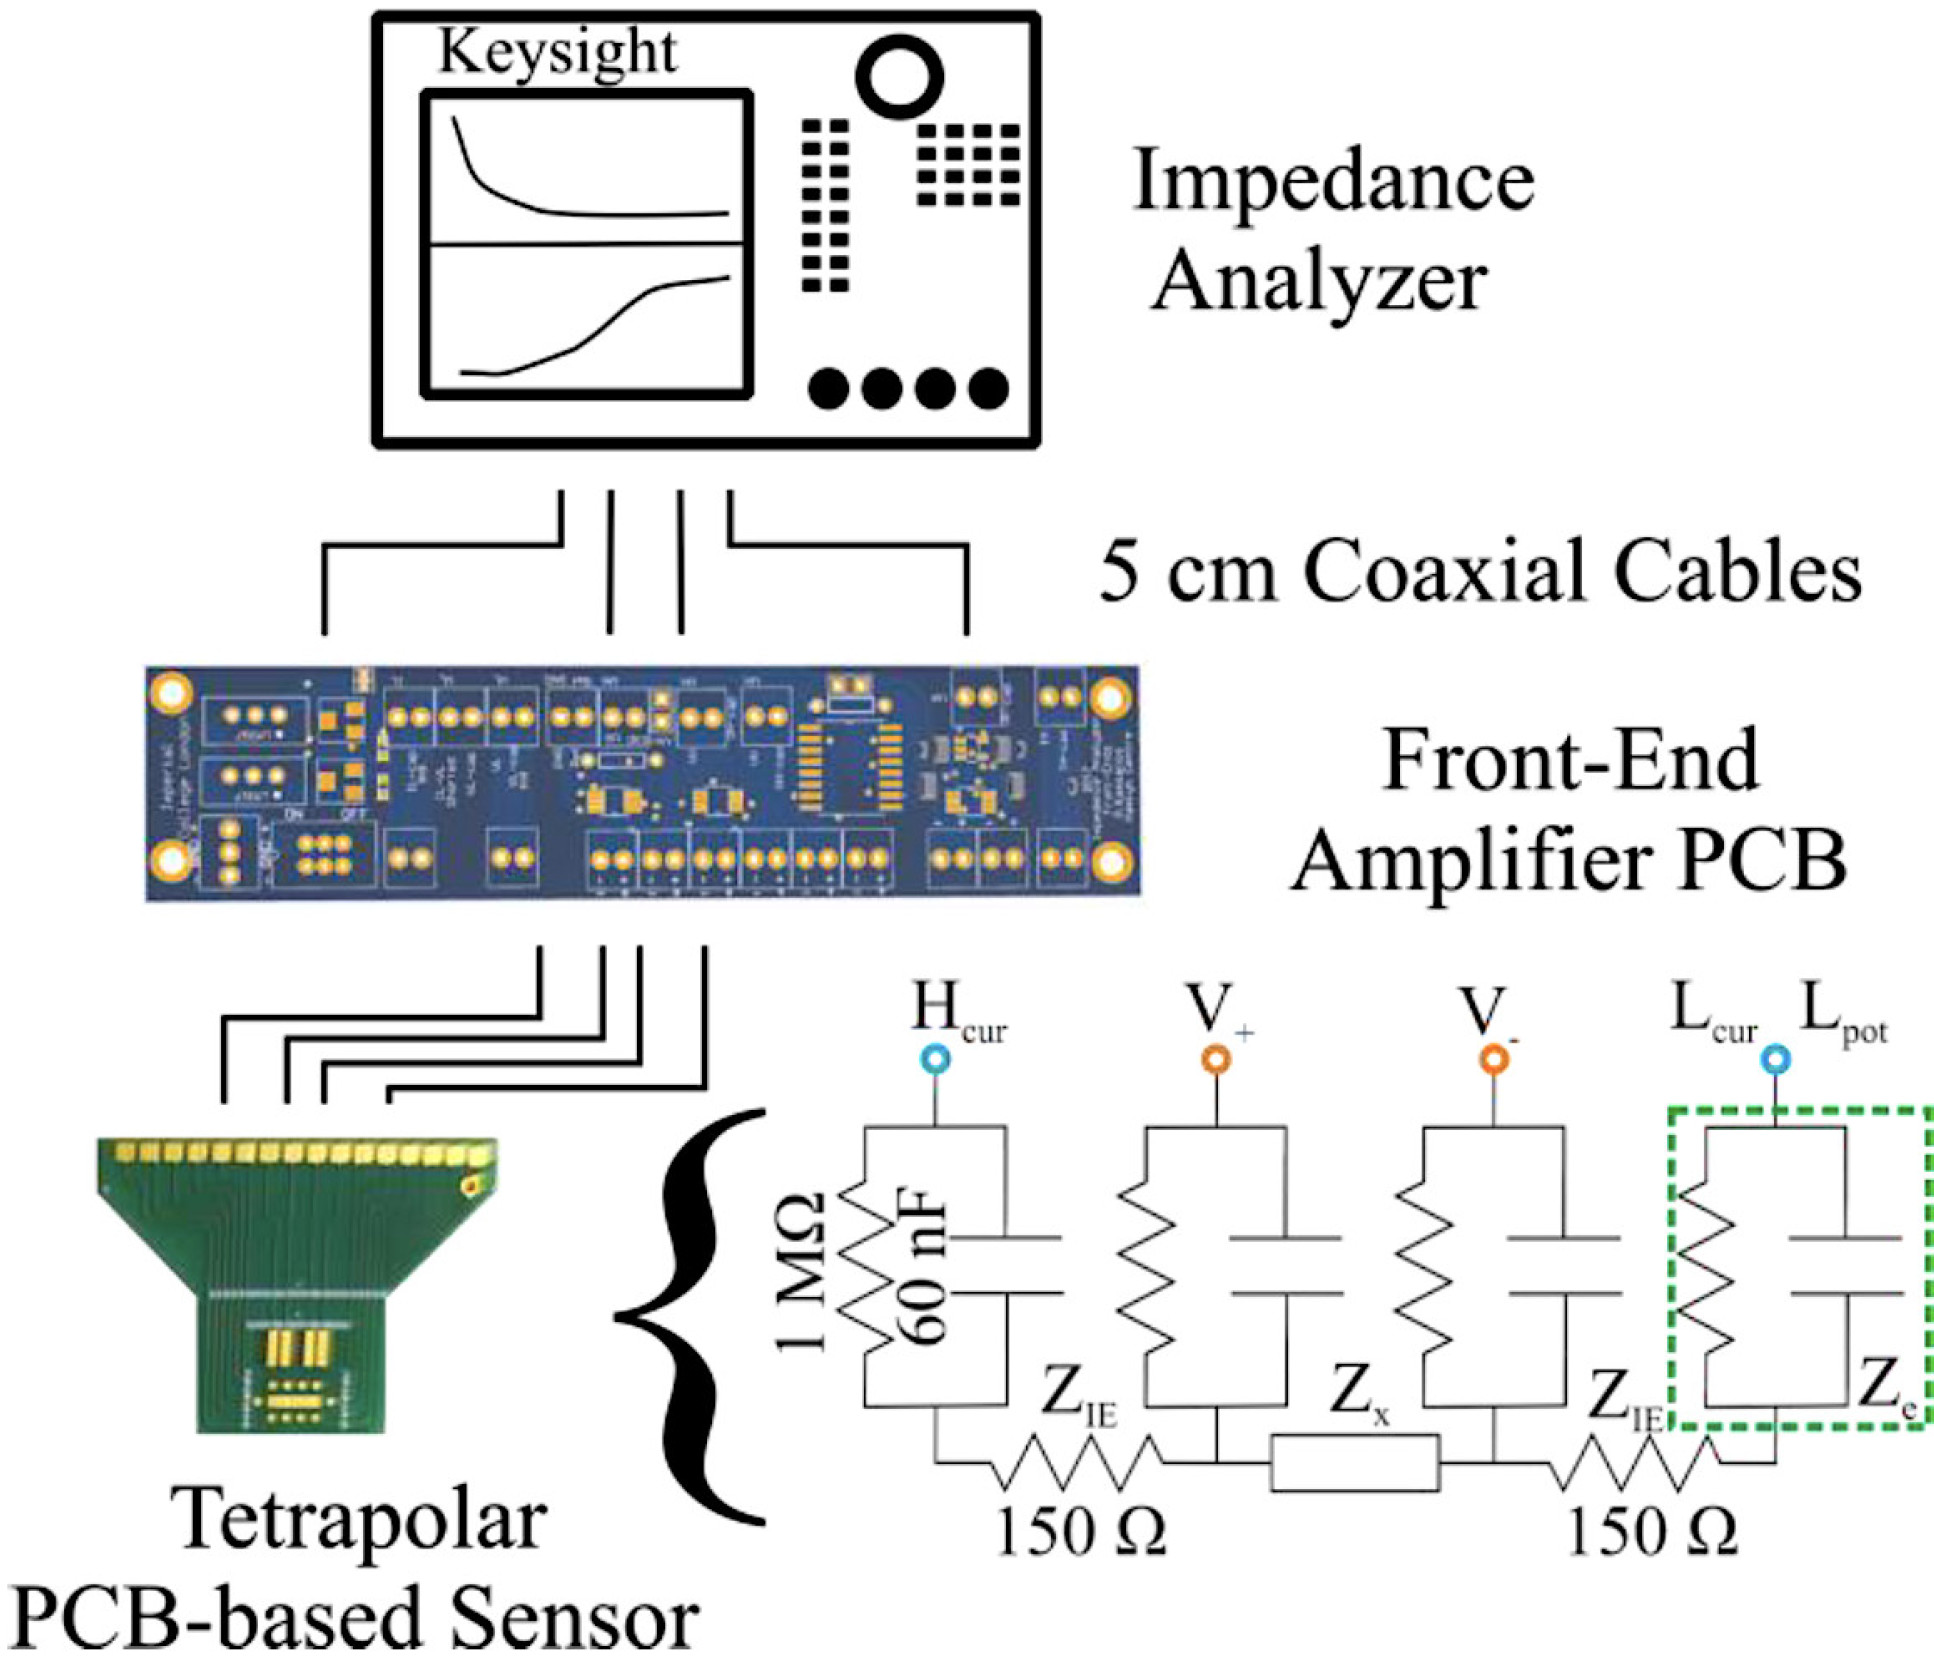 The experimental set-up for tetrapolar impedance measurements